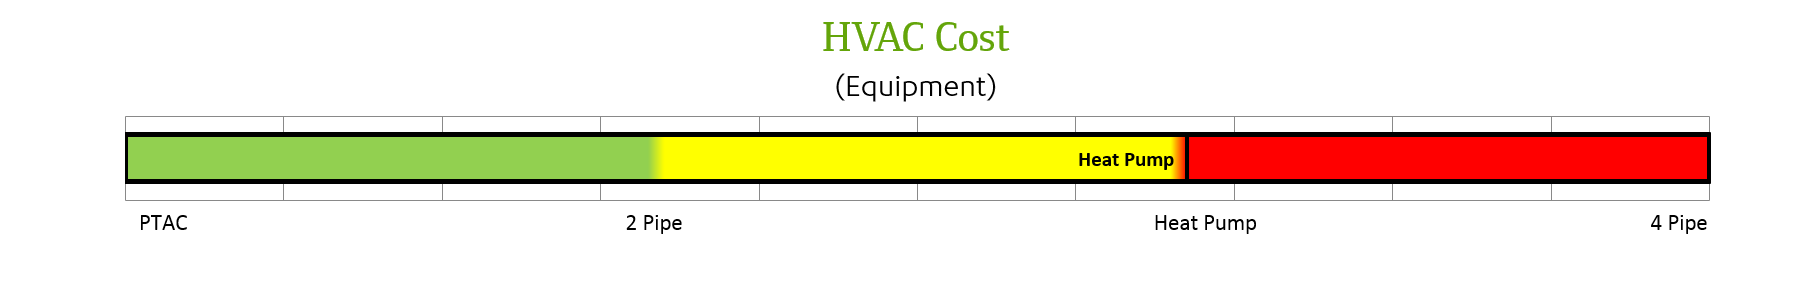 HVAC cost